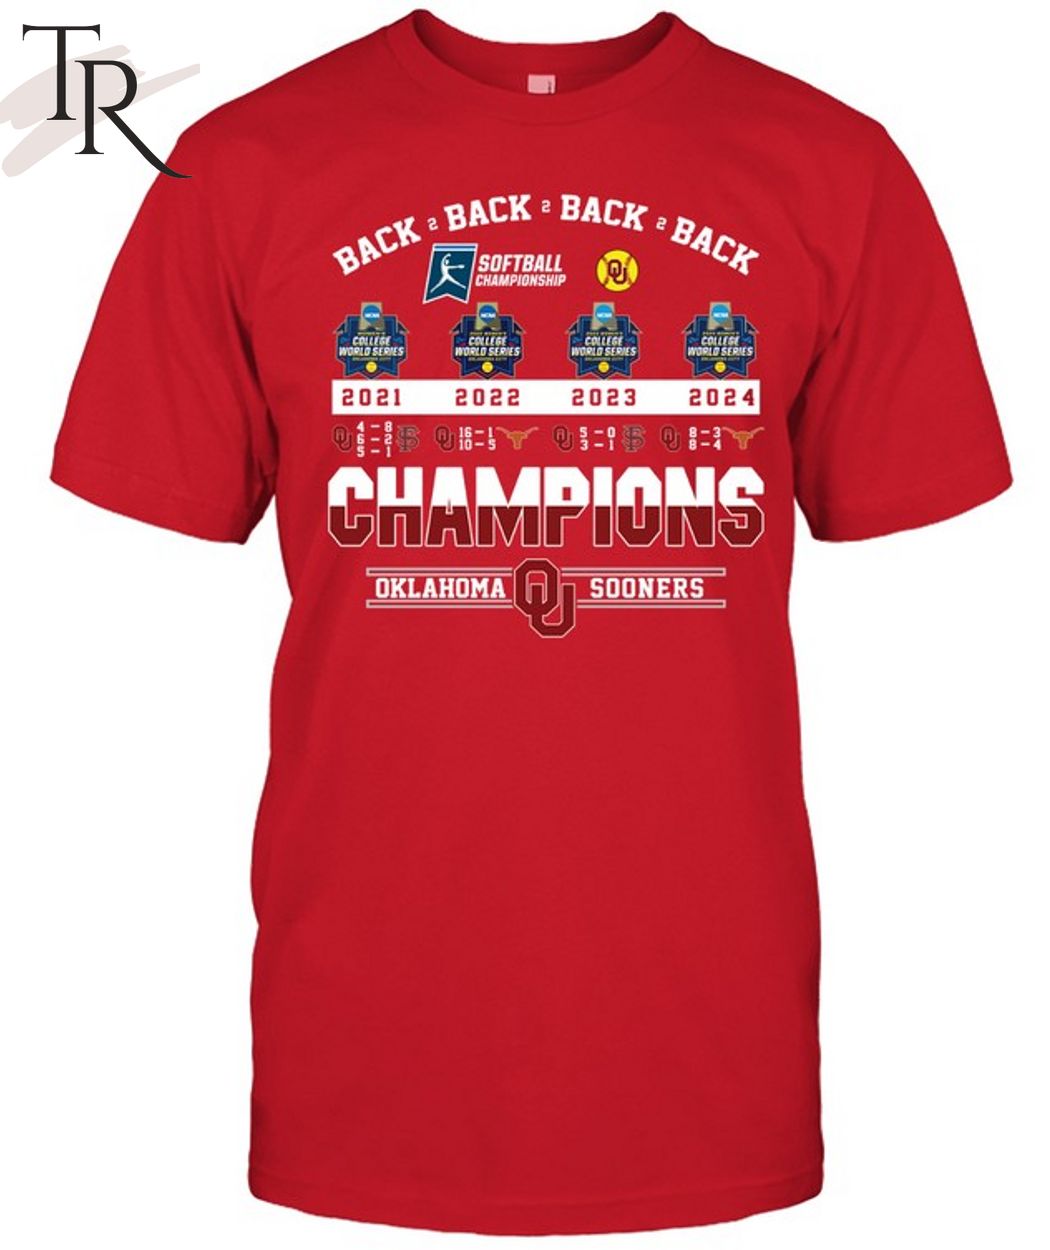 Back To Back To Back To Back Softball Championship Oklahoma Sooners T-Shirt